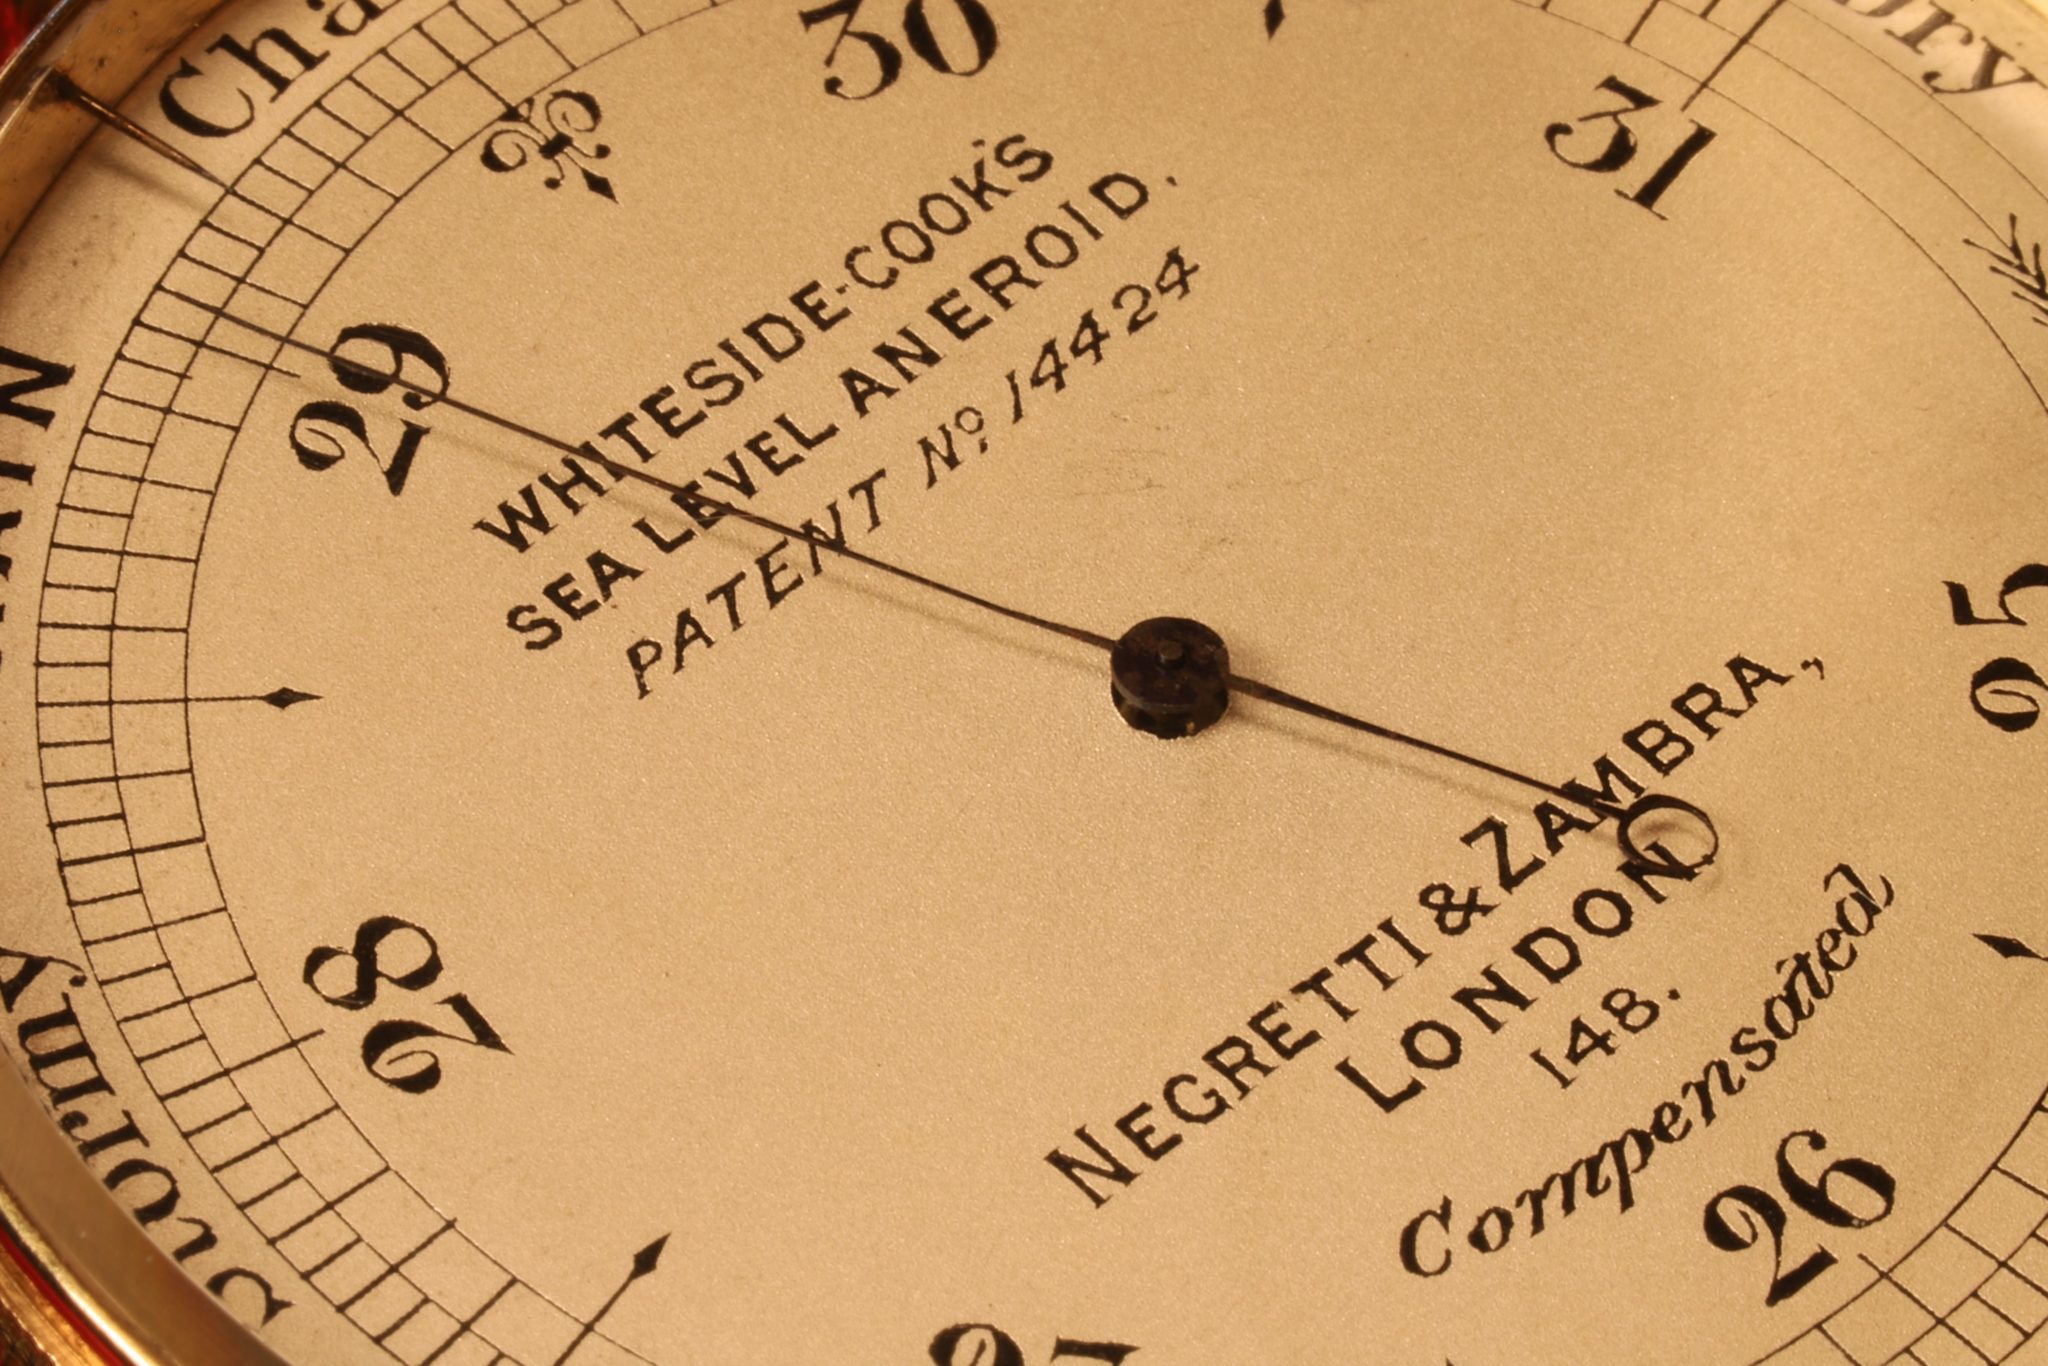 Image of Negretti & Zambra Whiteside Pocket Barometer No 148